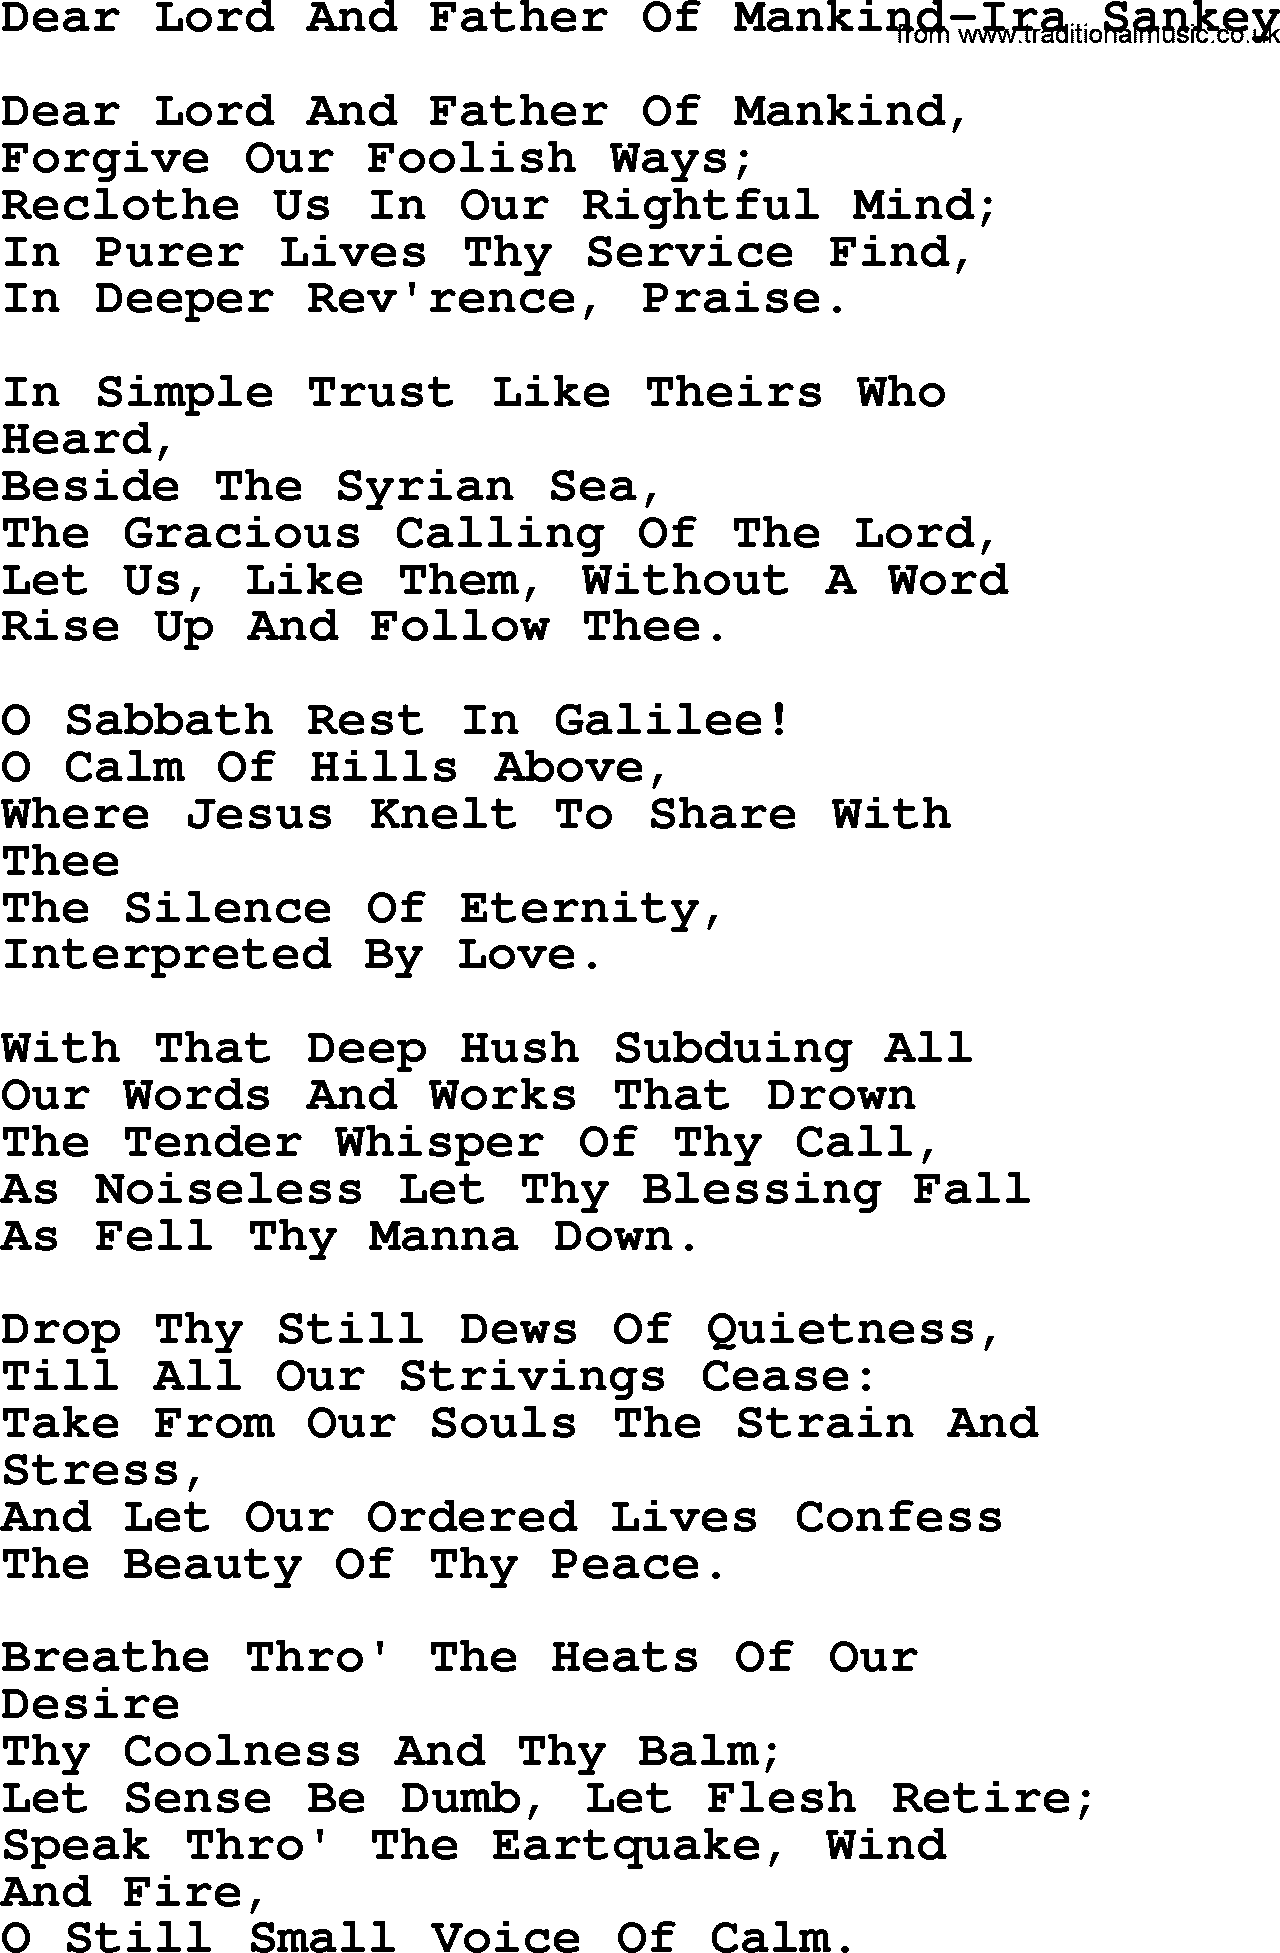 Ira Sankey hymn: Dear Lord And Father Of Mankind-Ira Sankey, lyrics